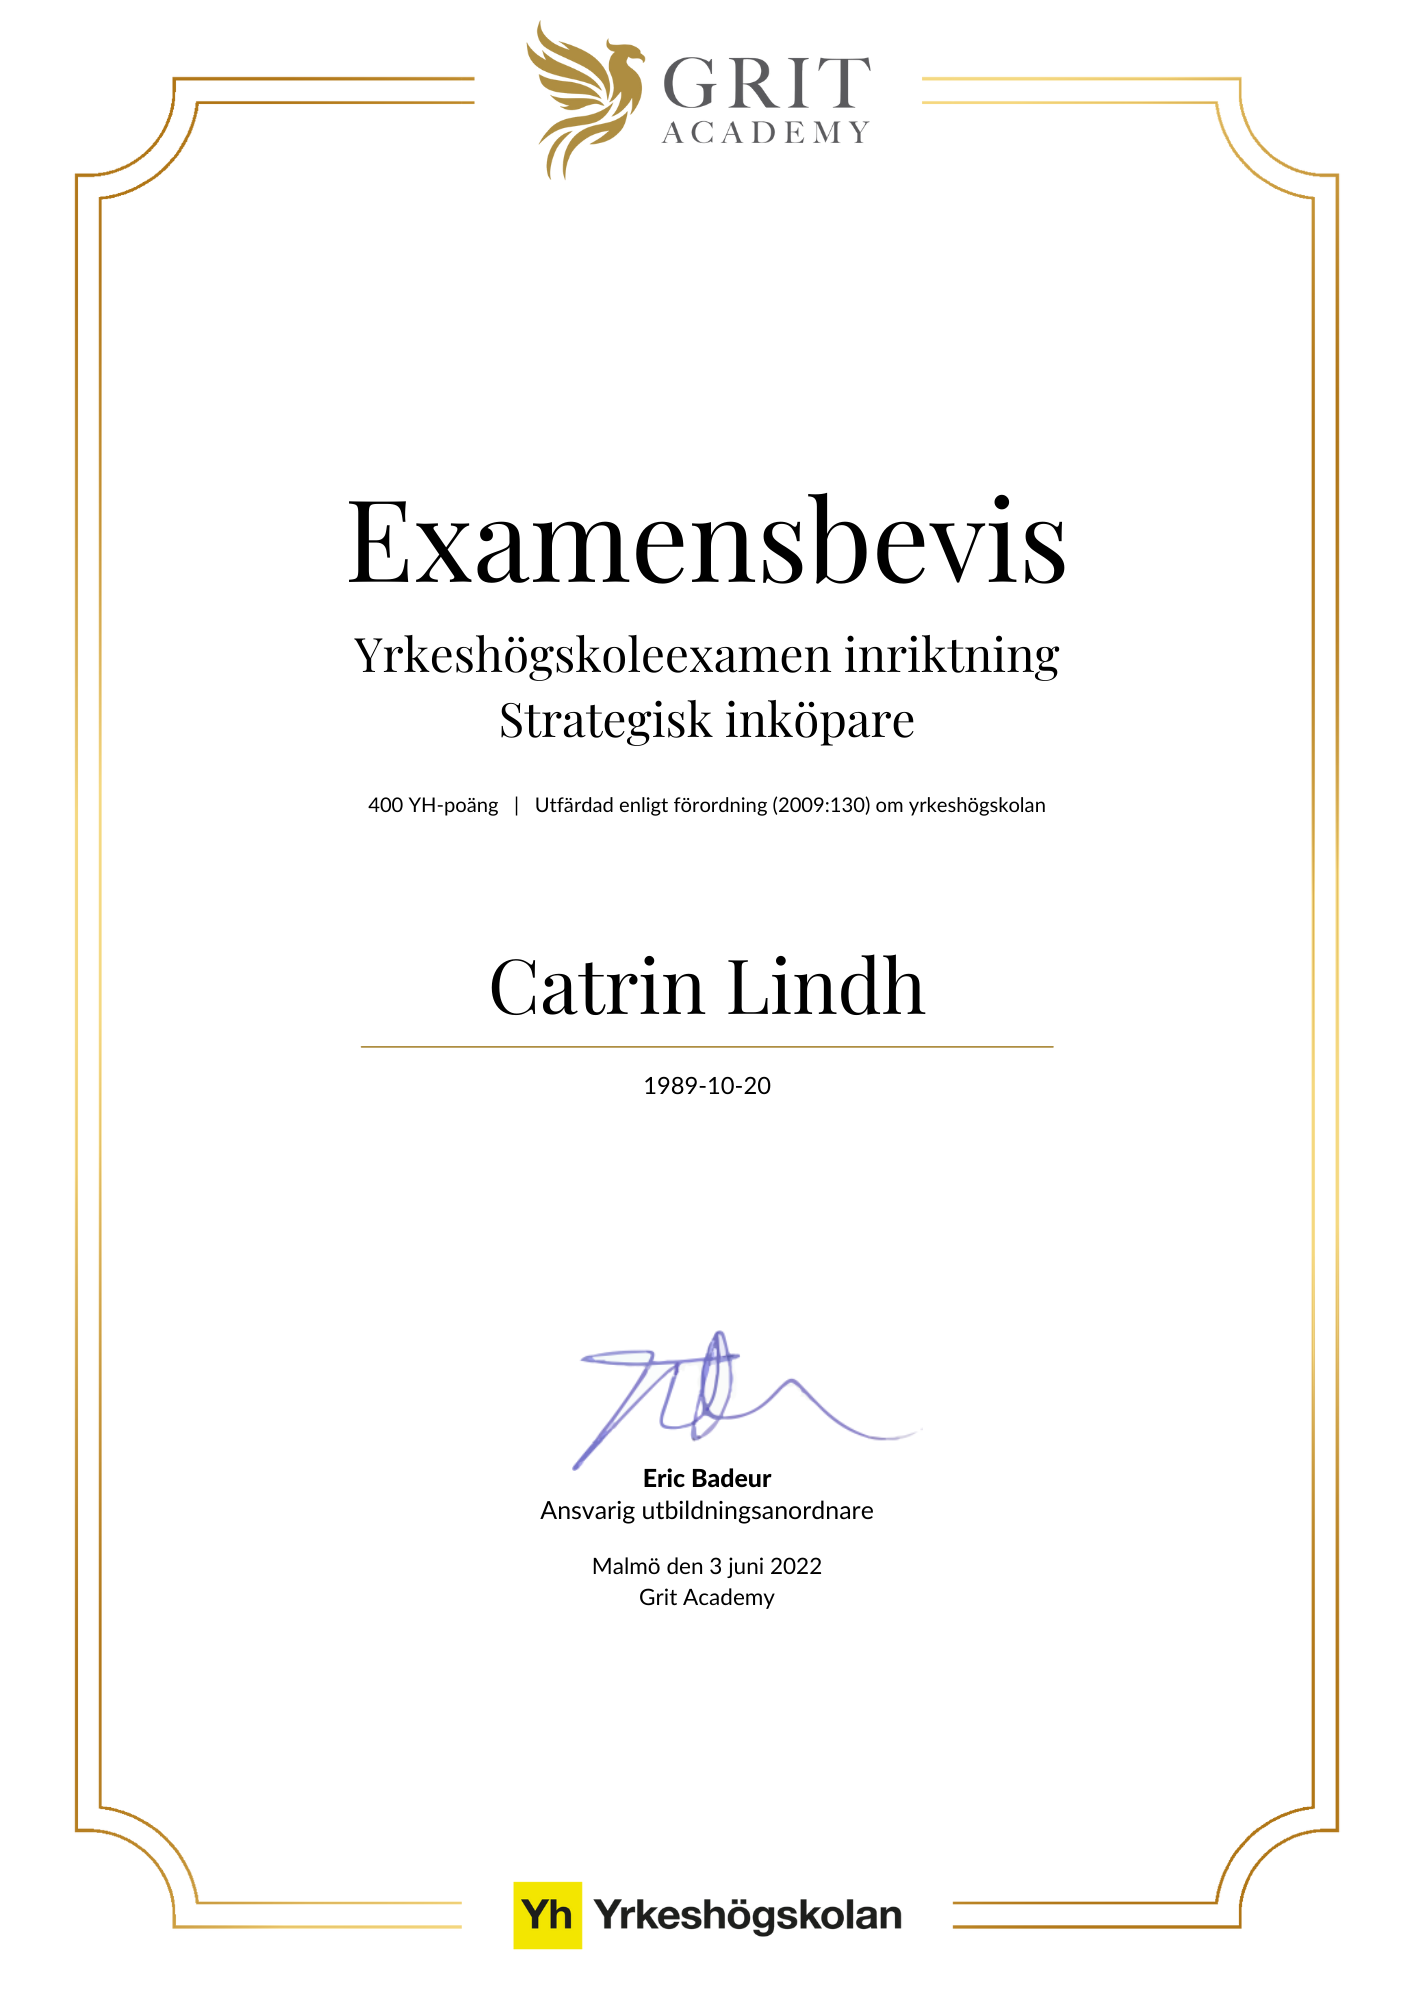 Examensbevis Catrin Lindh - 1